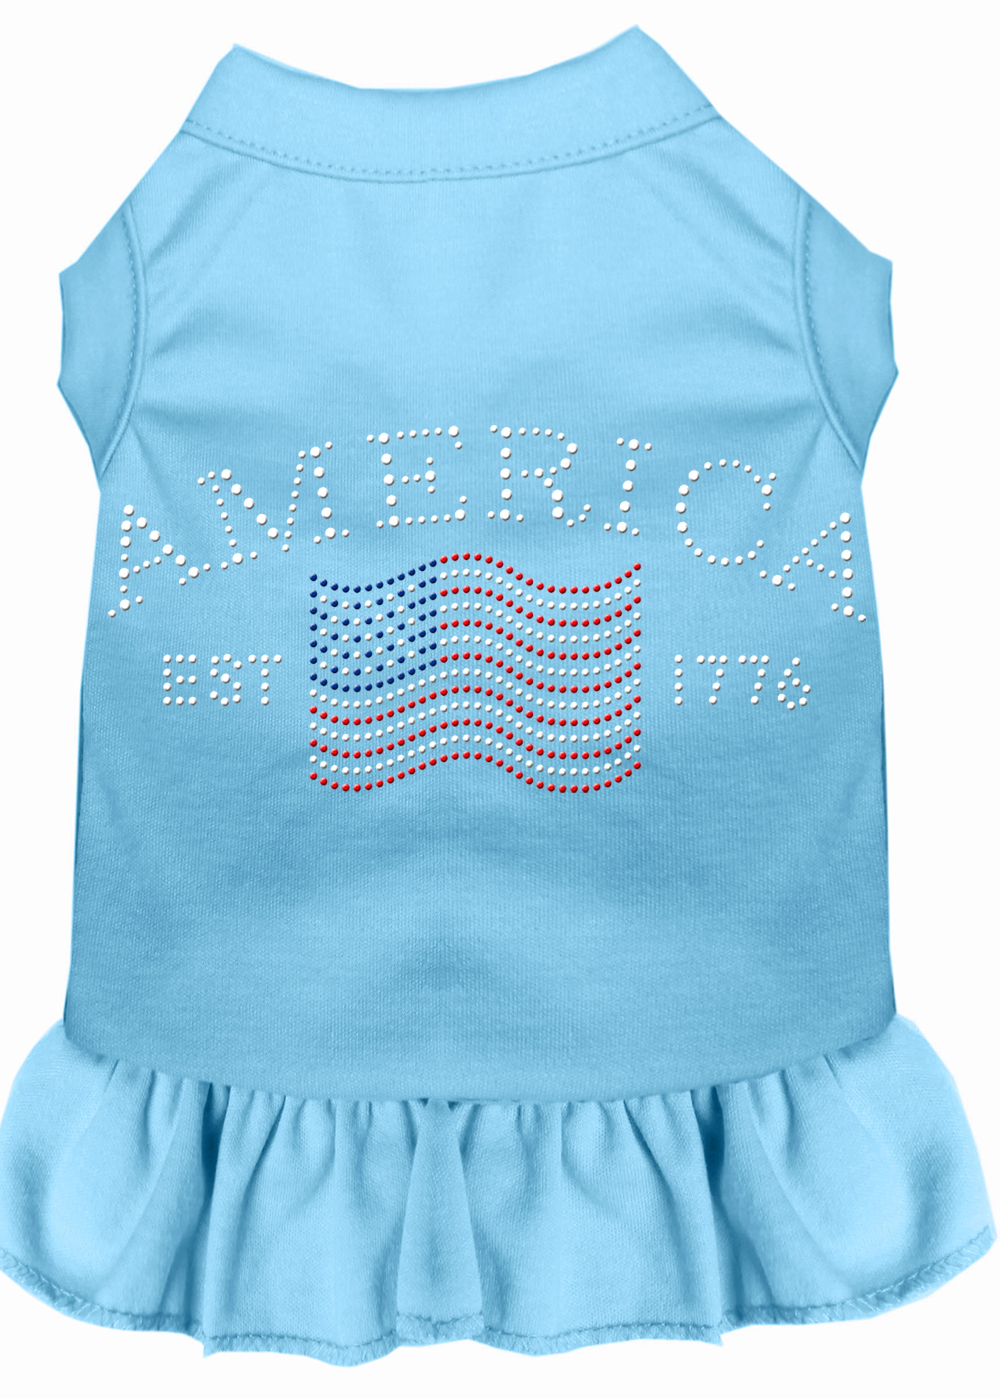 Classic America Rhinestone Dress Baby Blue Med